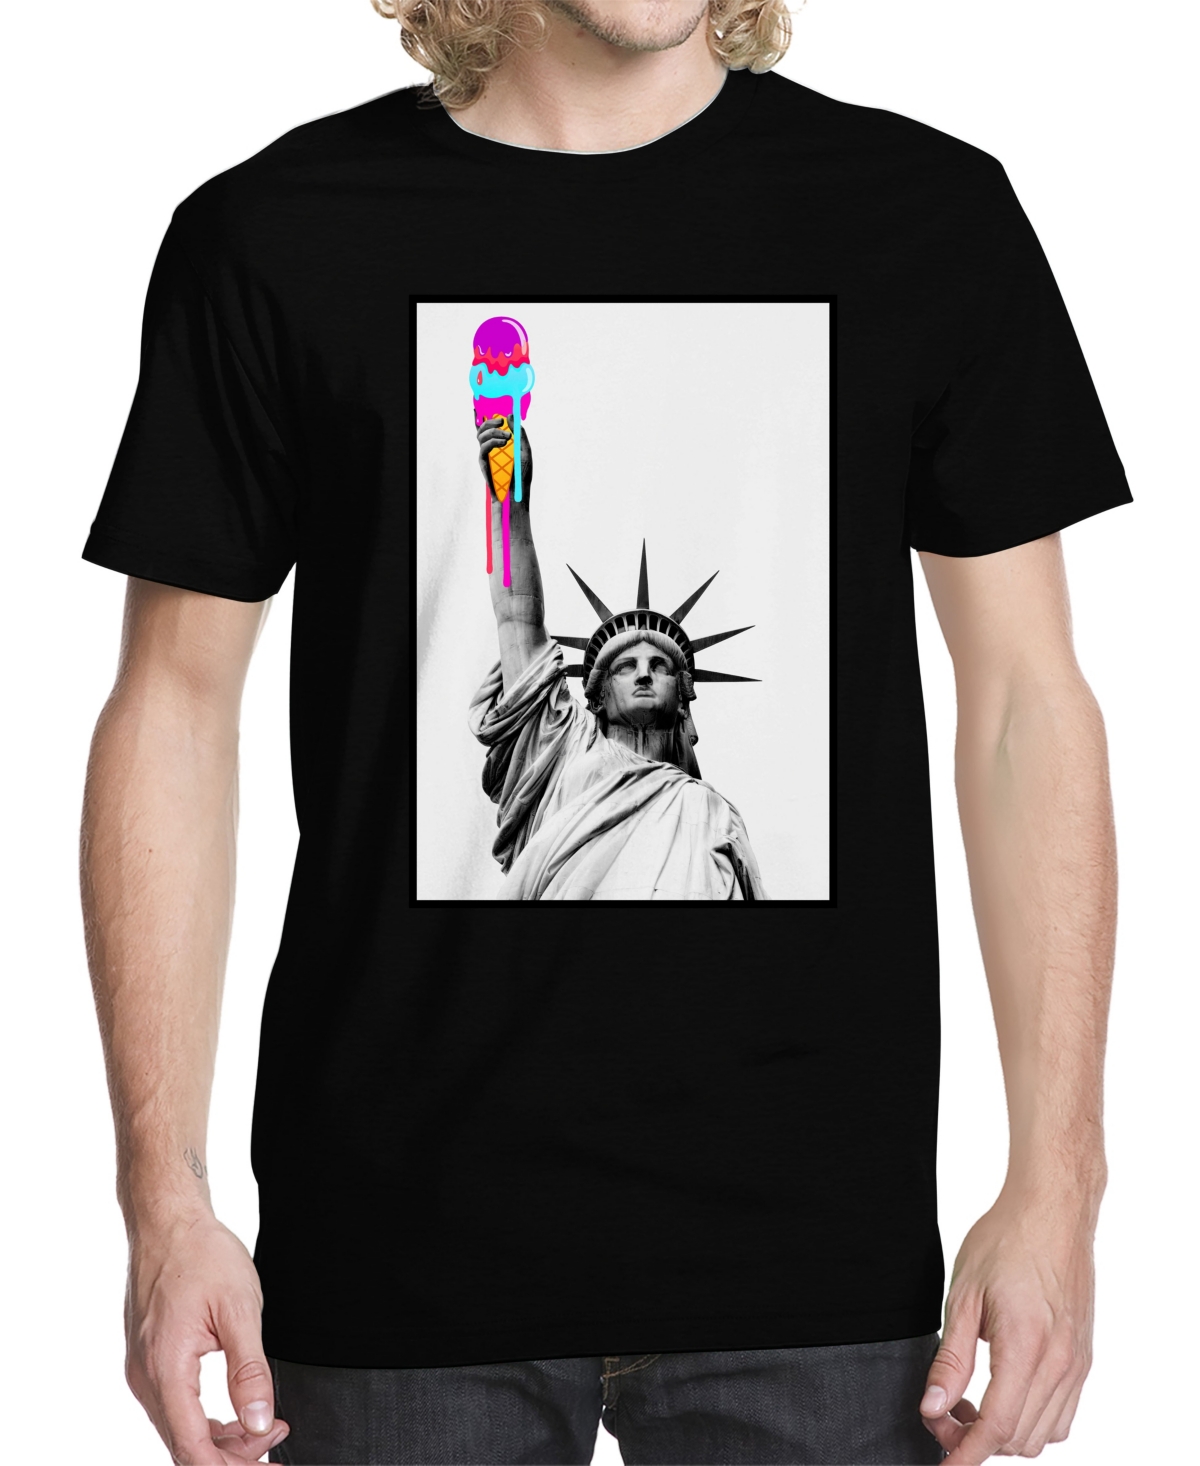 Men's Liberty Cream Graphic T-shirt - Black